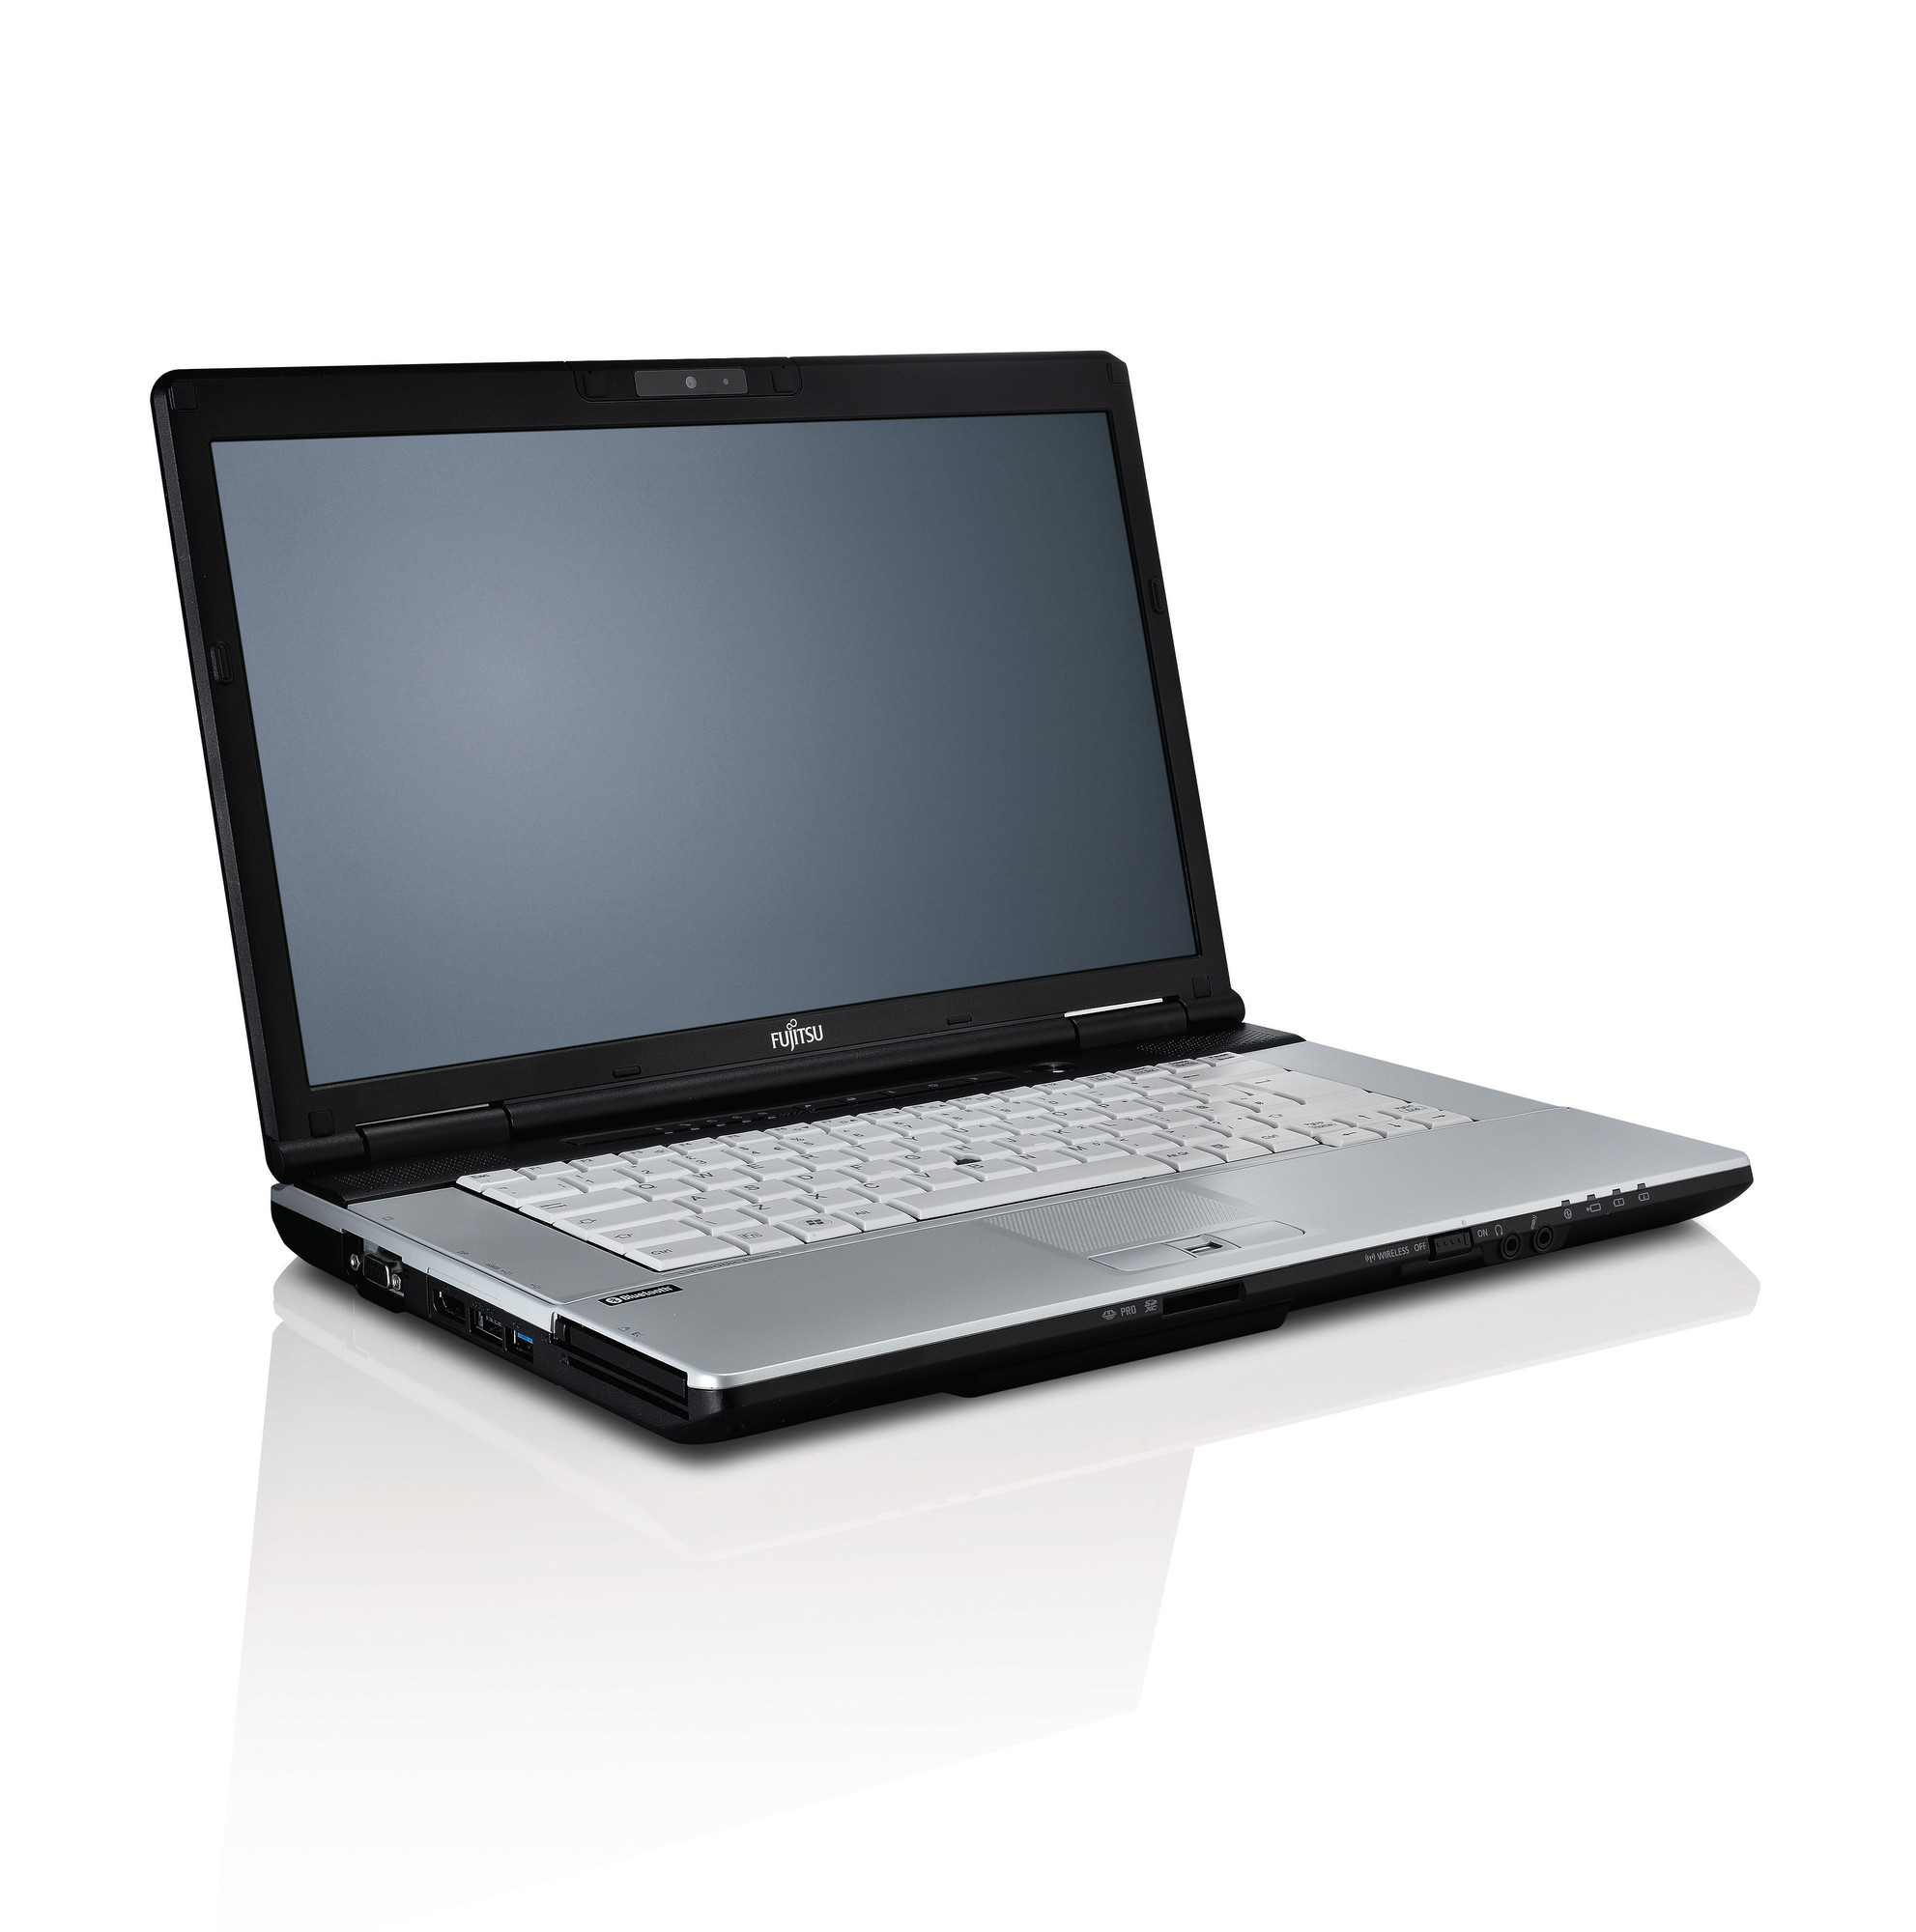 Fujitsu: notebooki proGreen – do 17 godzin pracy na bateriach